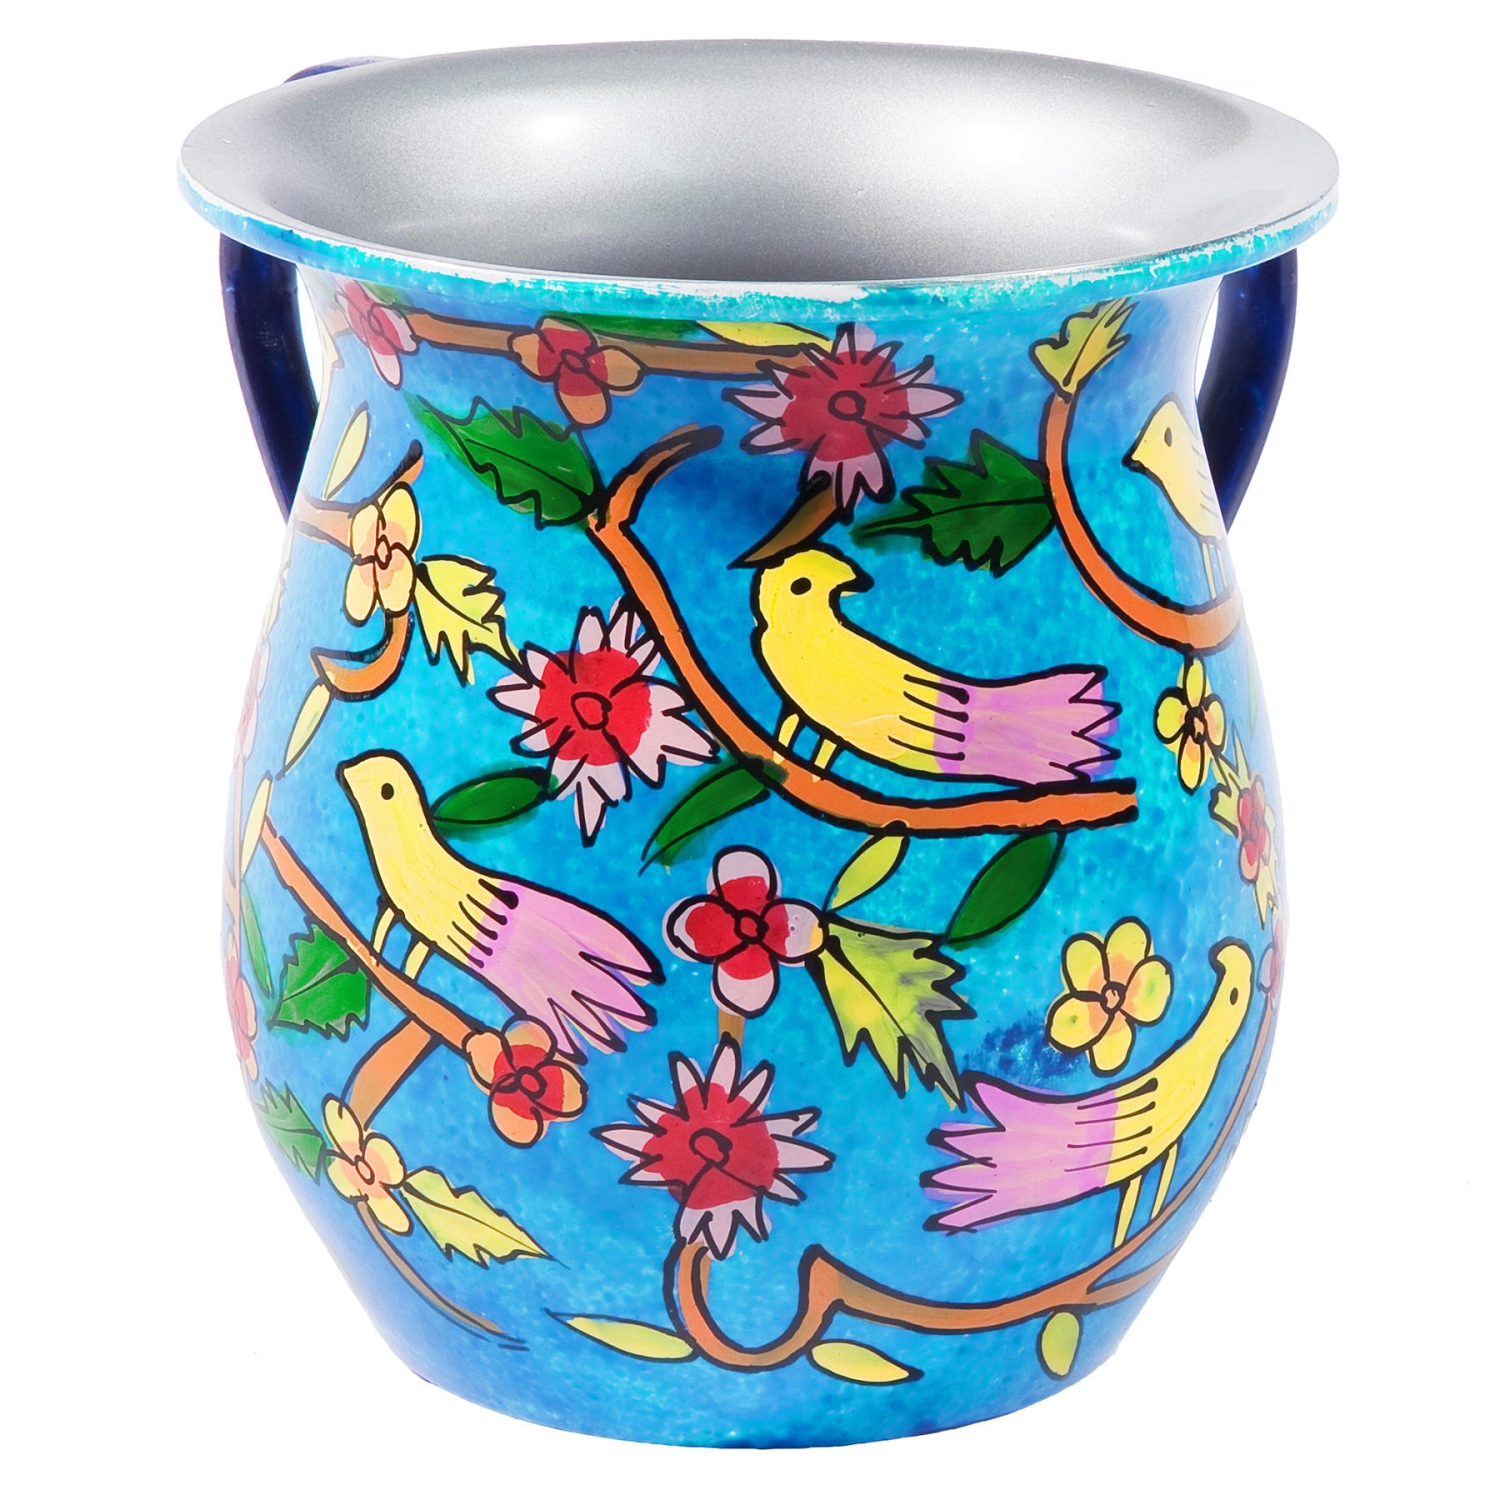 Yair Emanuel Hand Painted Metal Washing Cup - Birds - 1